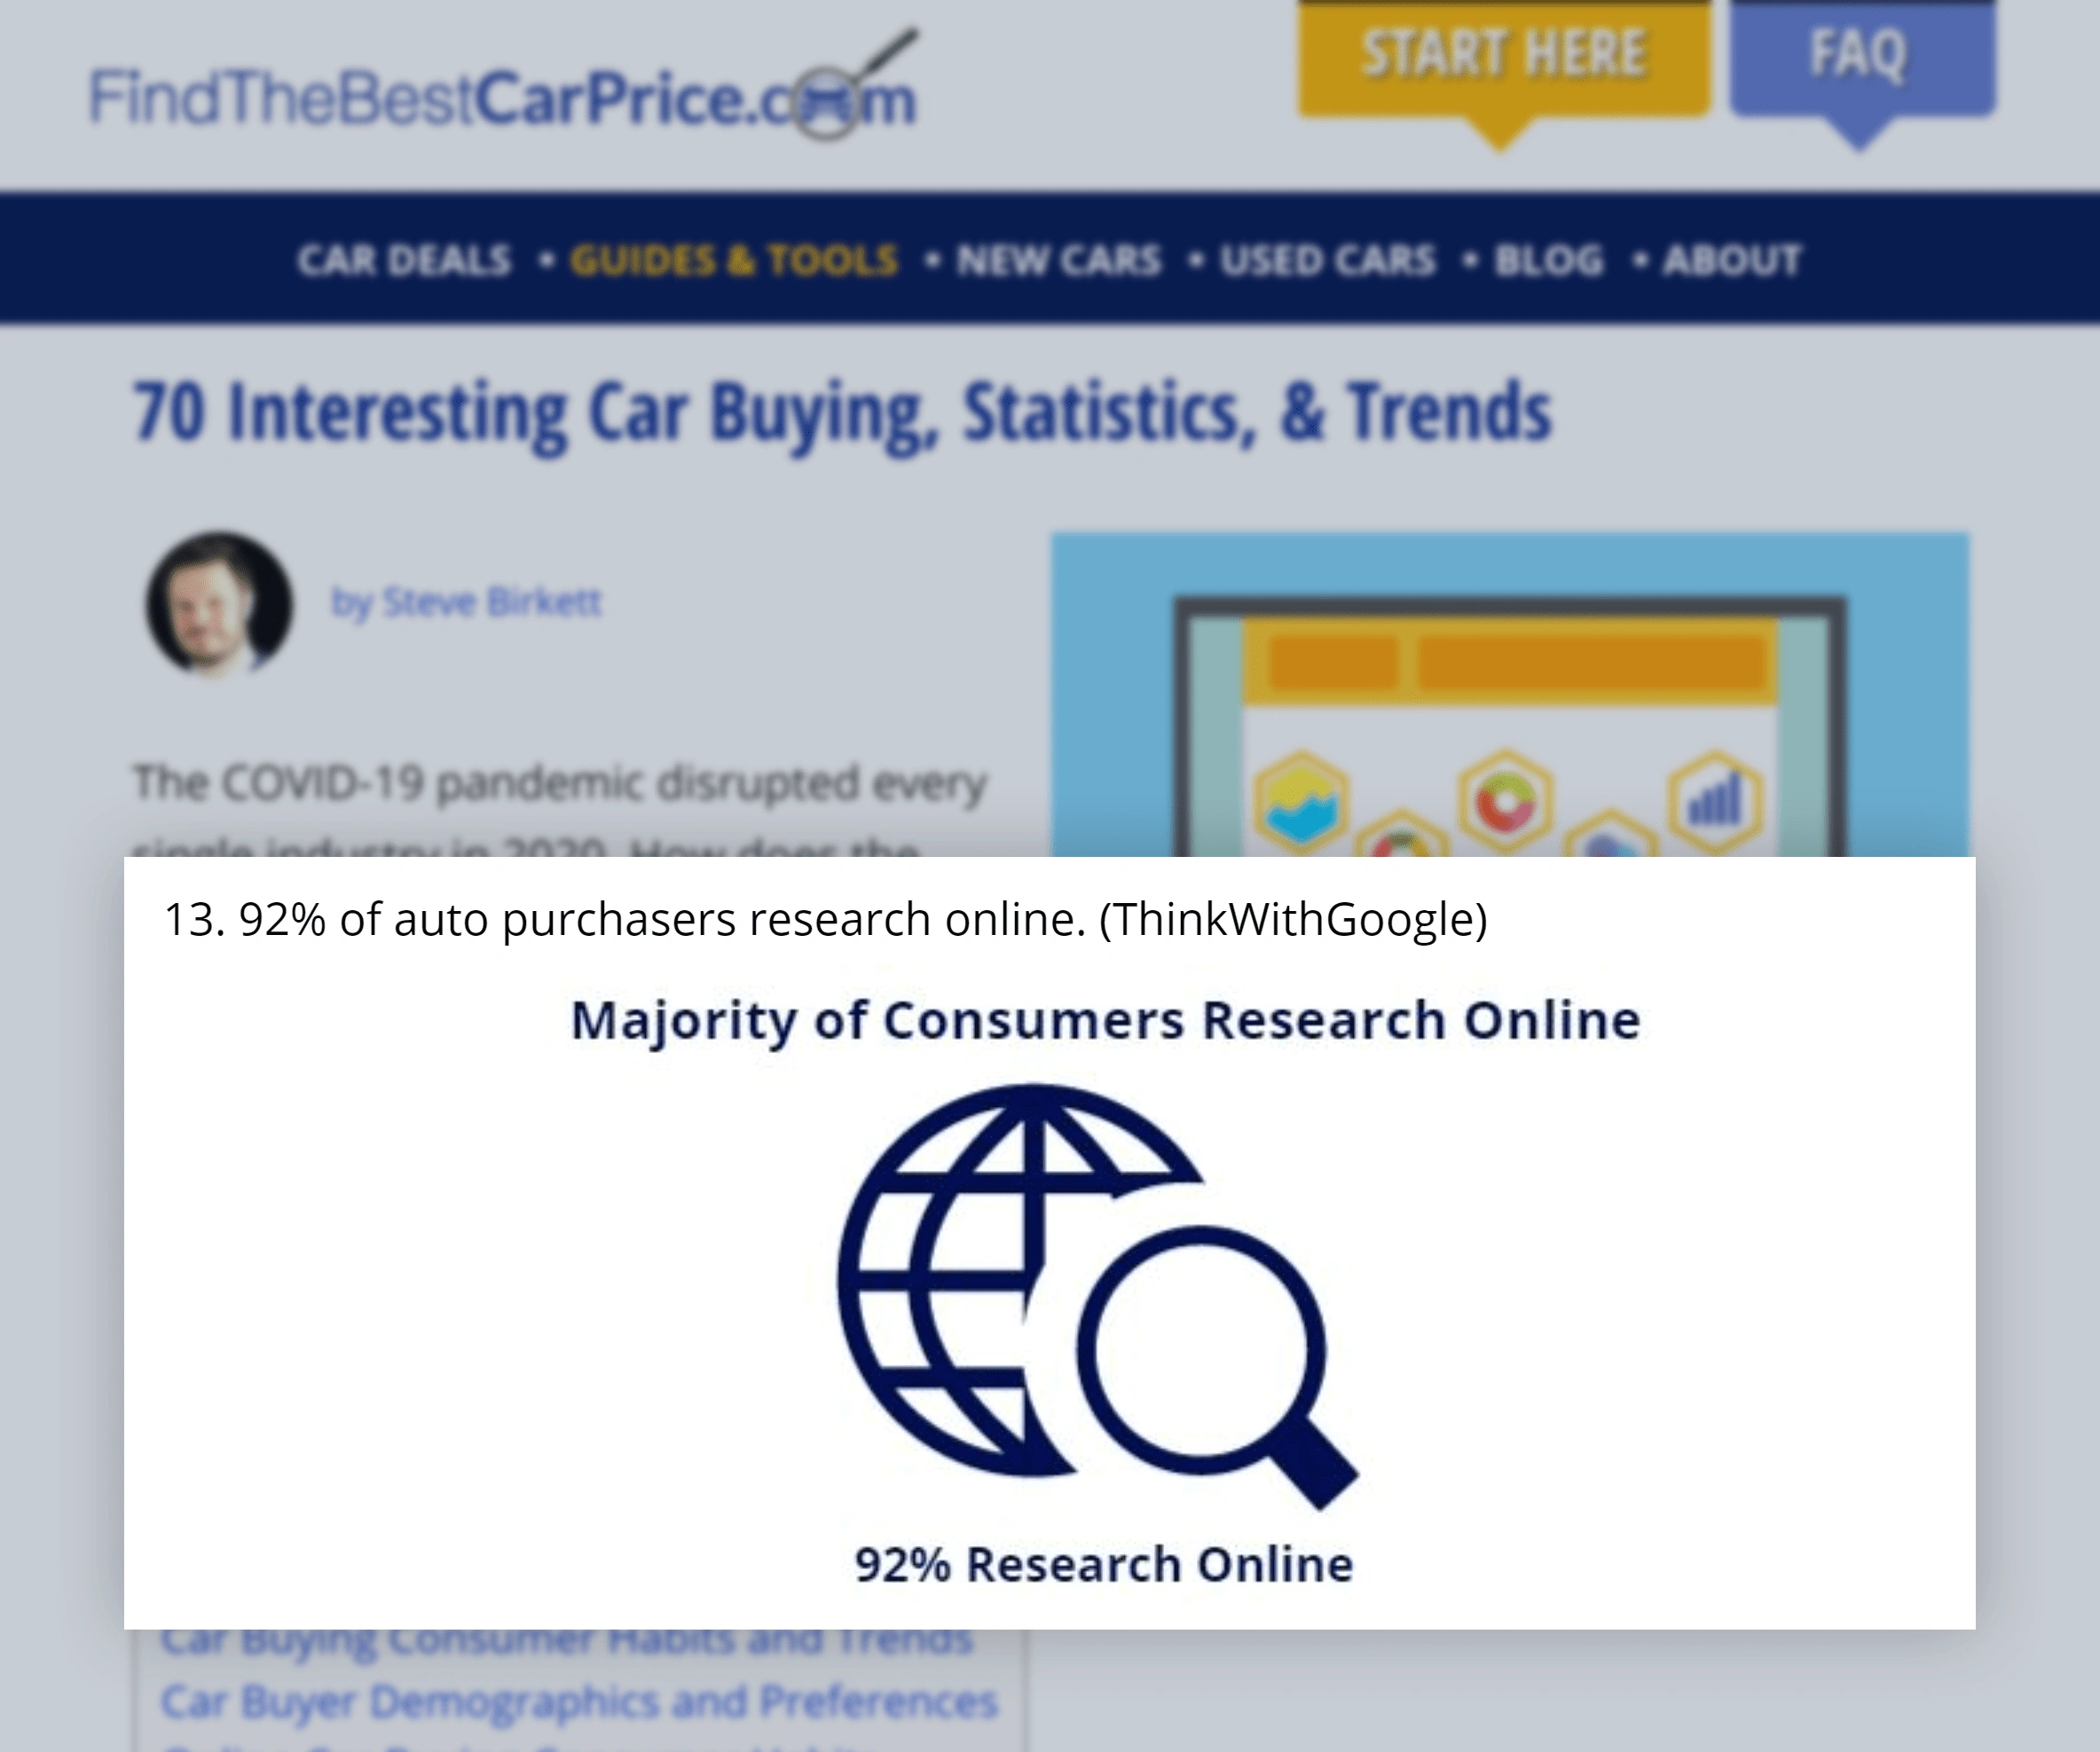 car-buying-statistics-trends-min.png